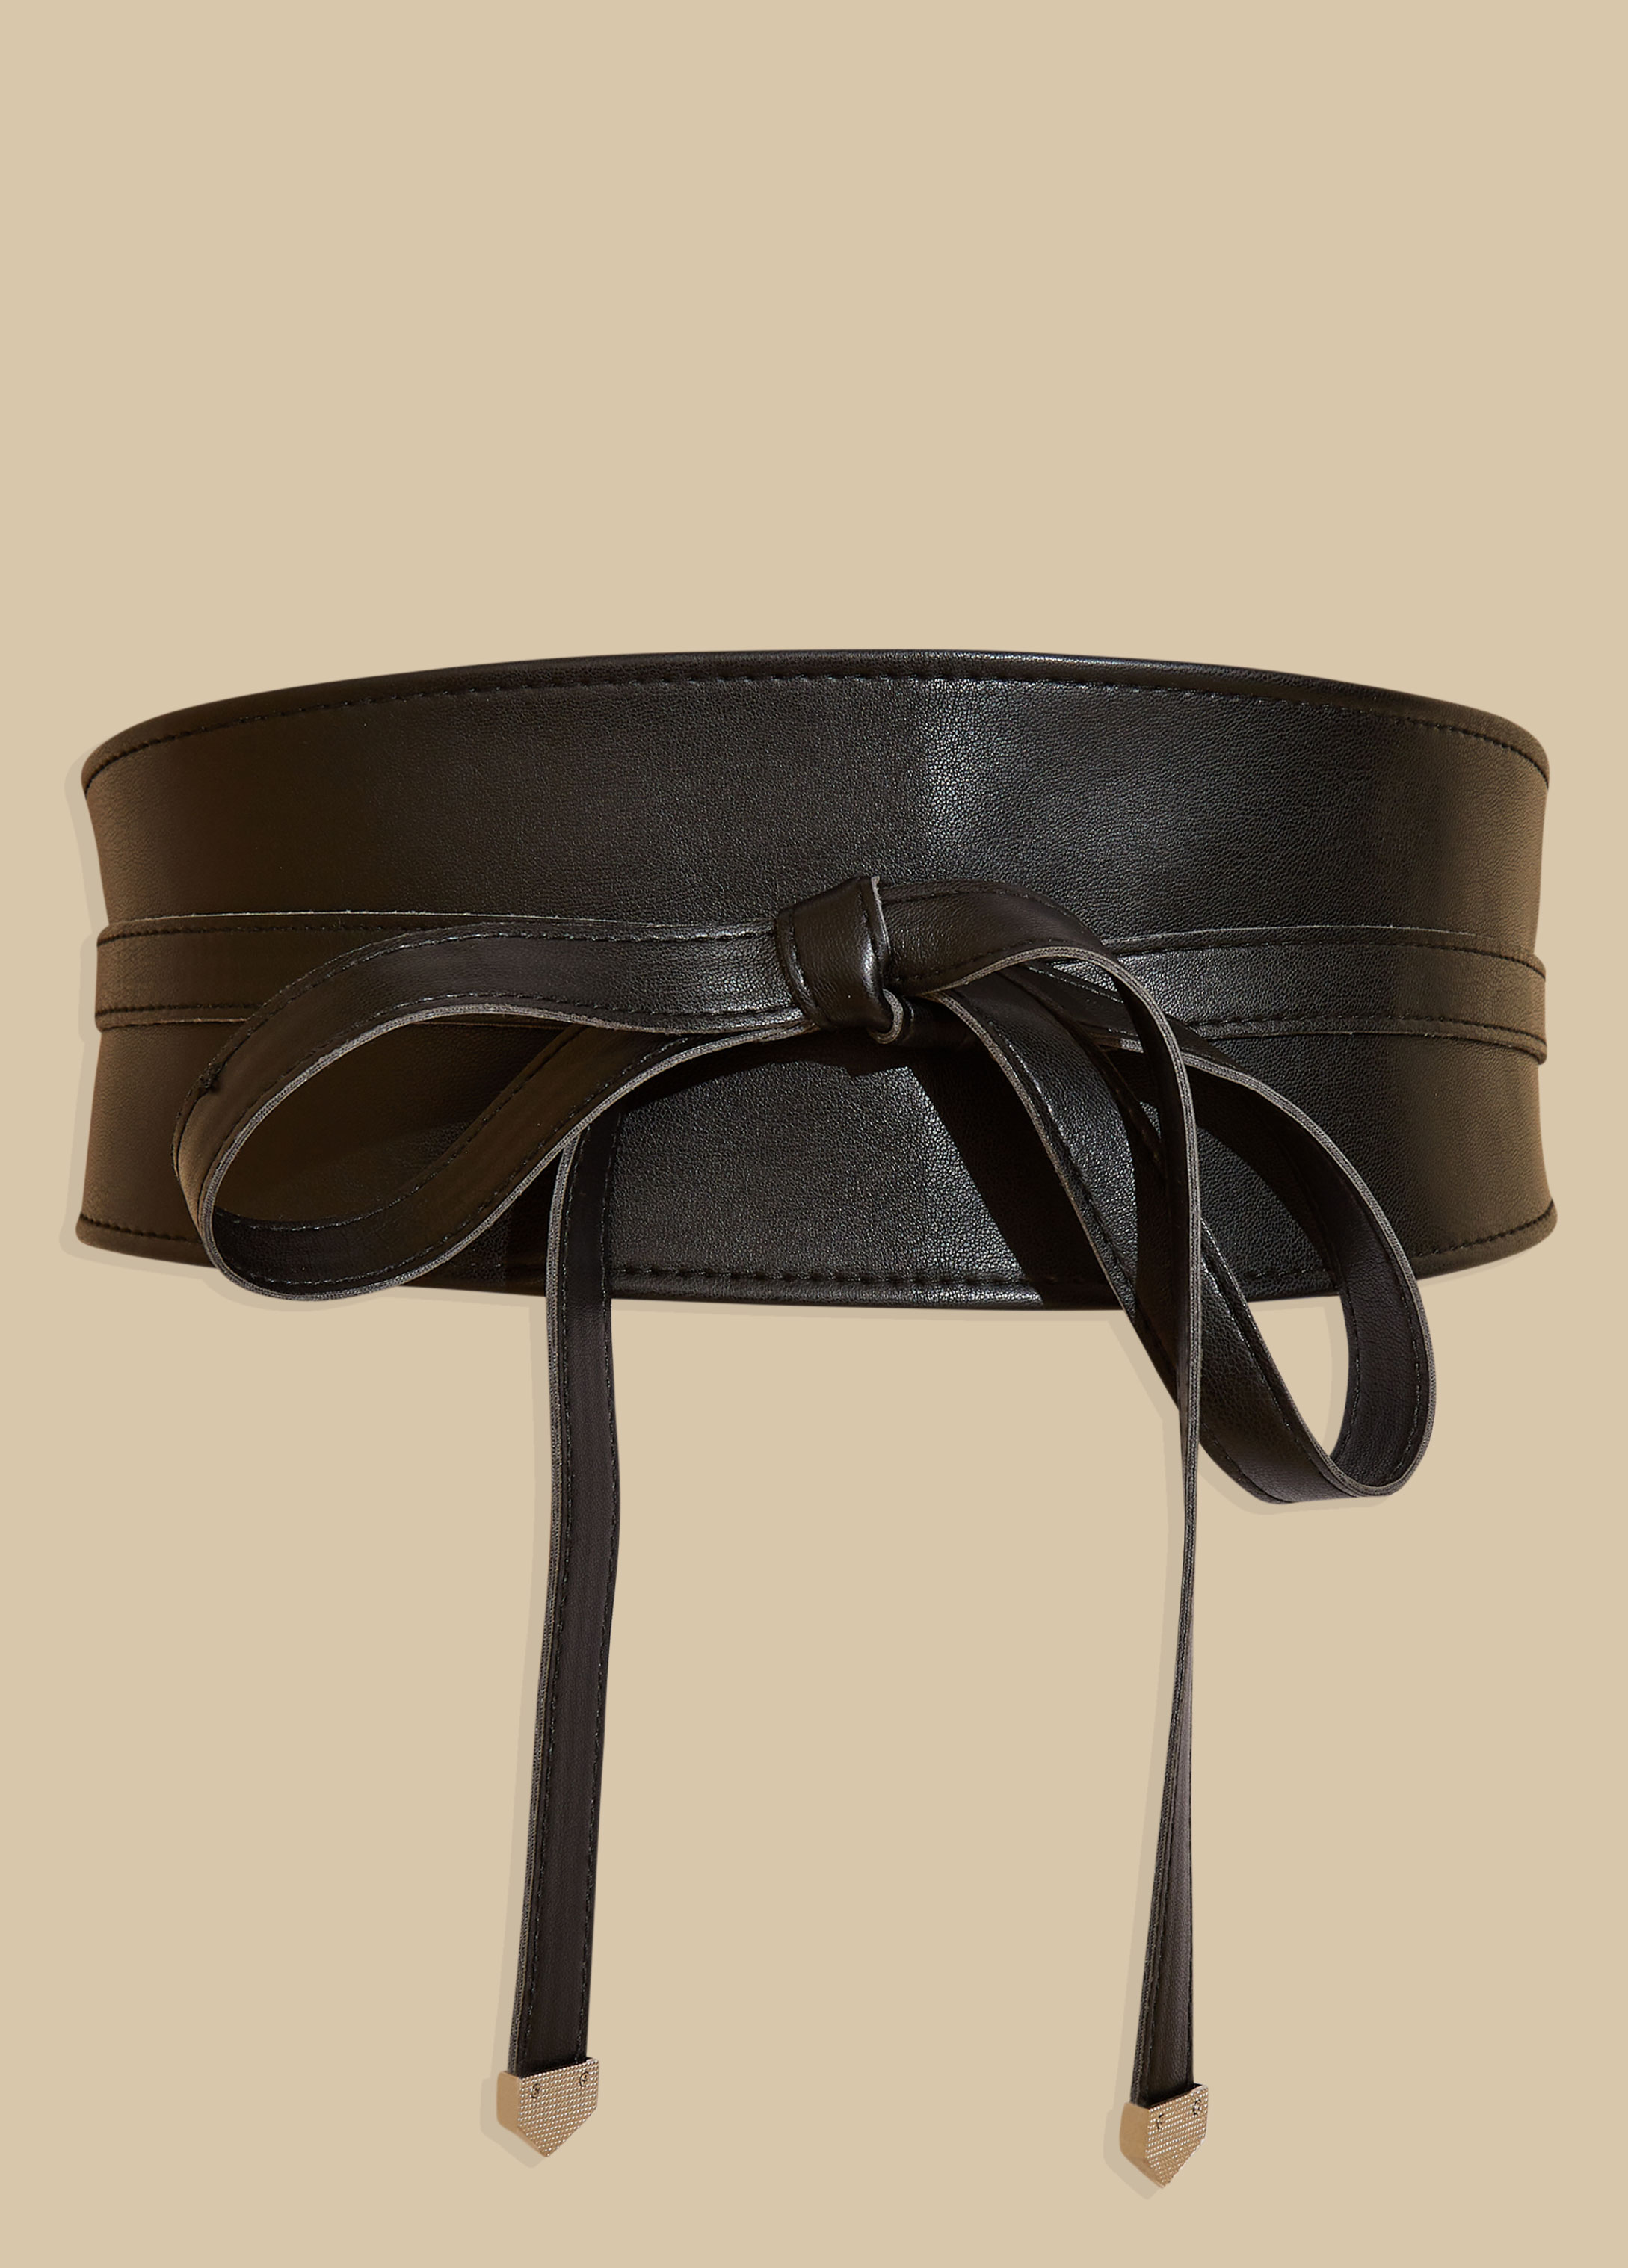 Faux Leather Waist Belt With Sheepskin Pattern, Lace-up Decoration